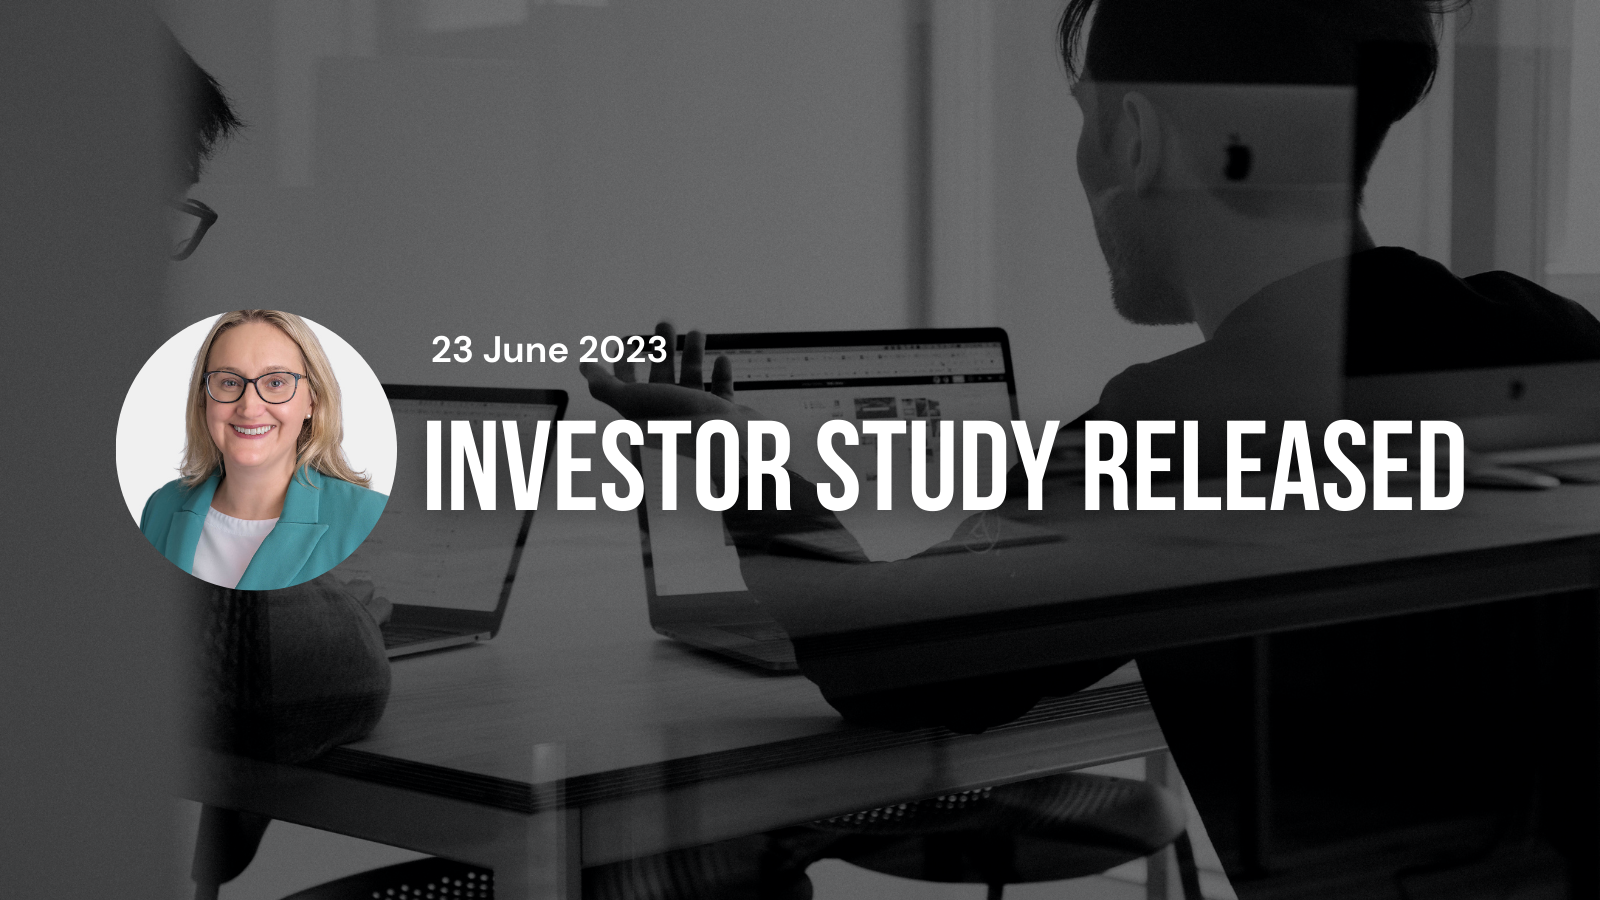 Investor study released